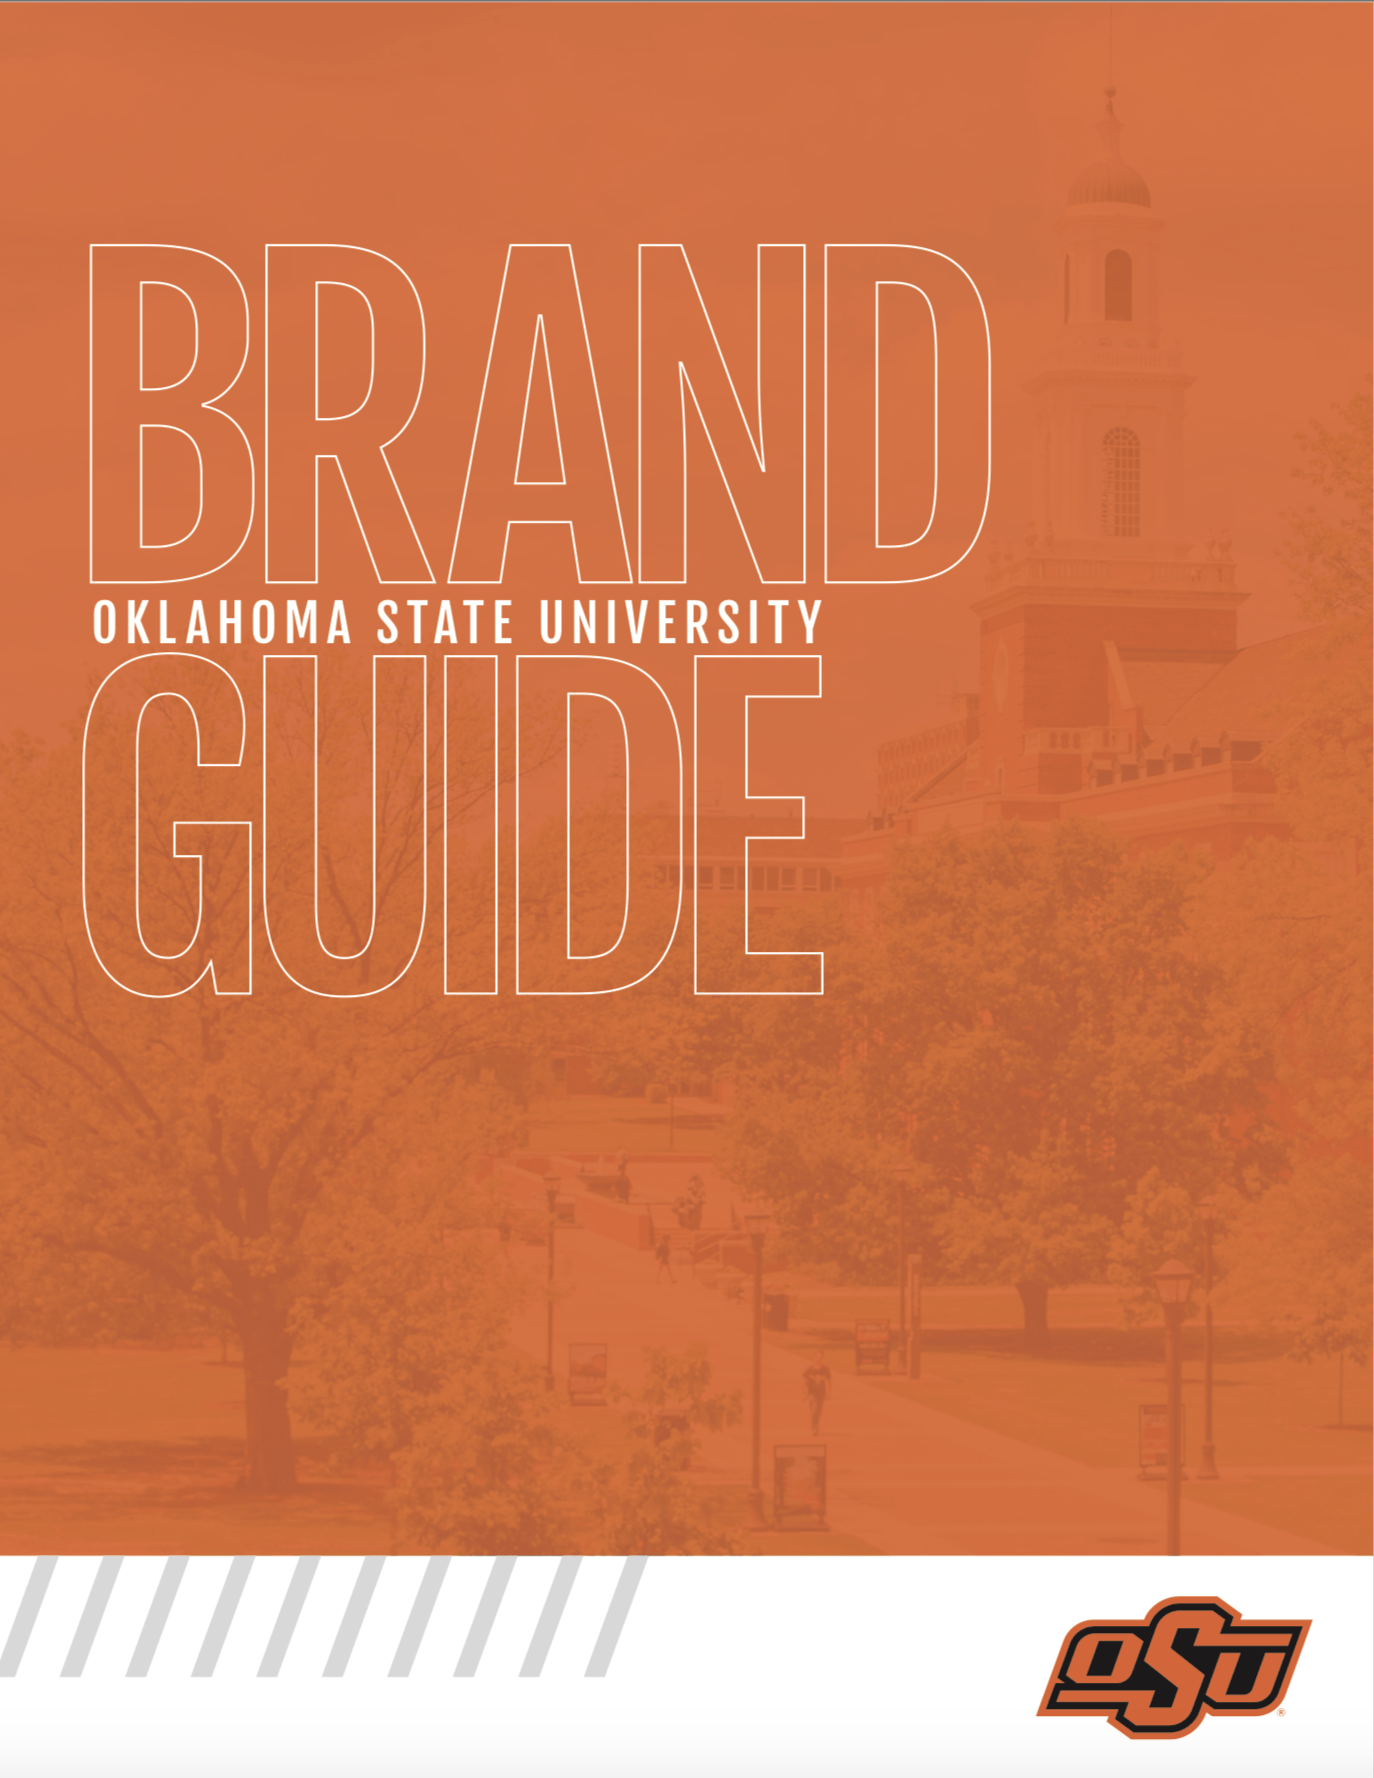 The Oklahoma State University Rebrand: One University, One Logo for All- Logo